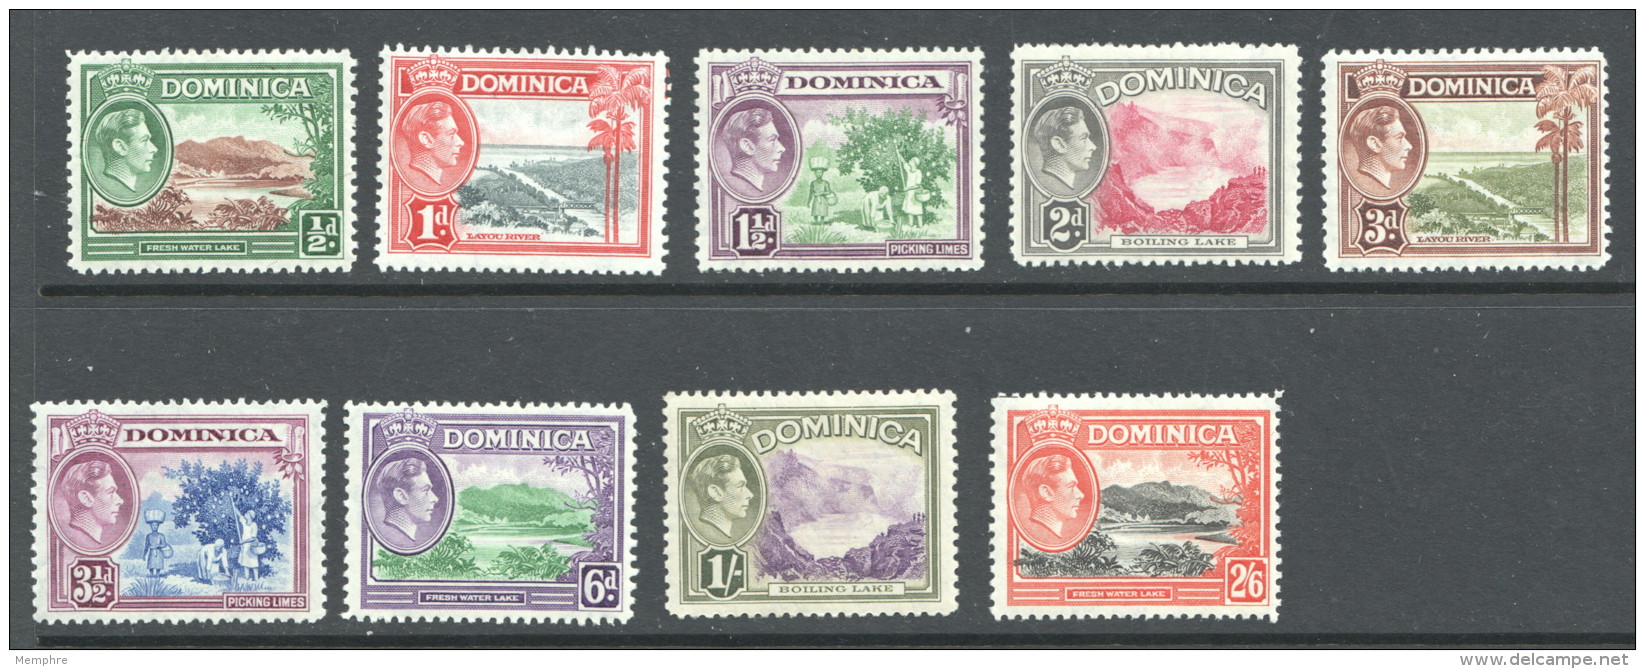 1938  George VI Definitives  9 Values MM - MH - Dominique (...-1978)